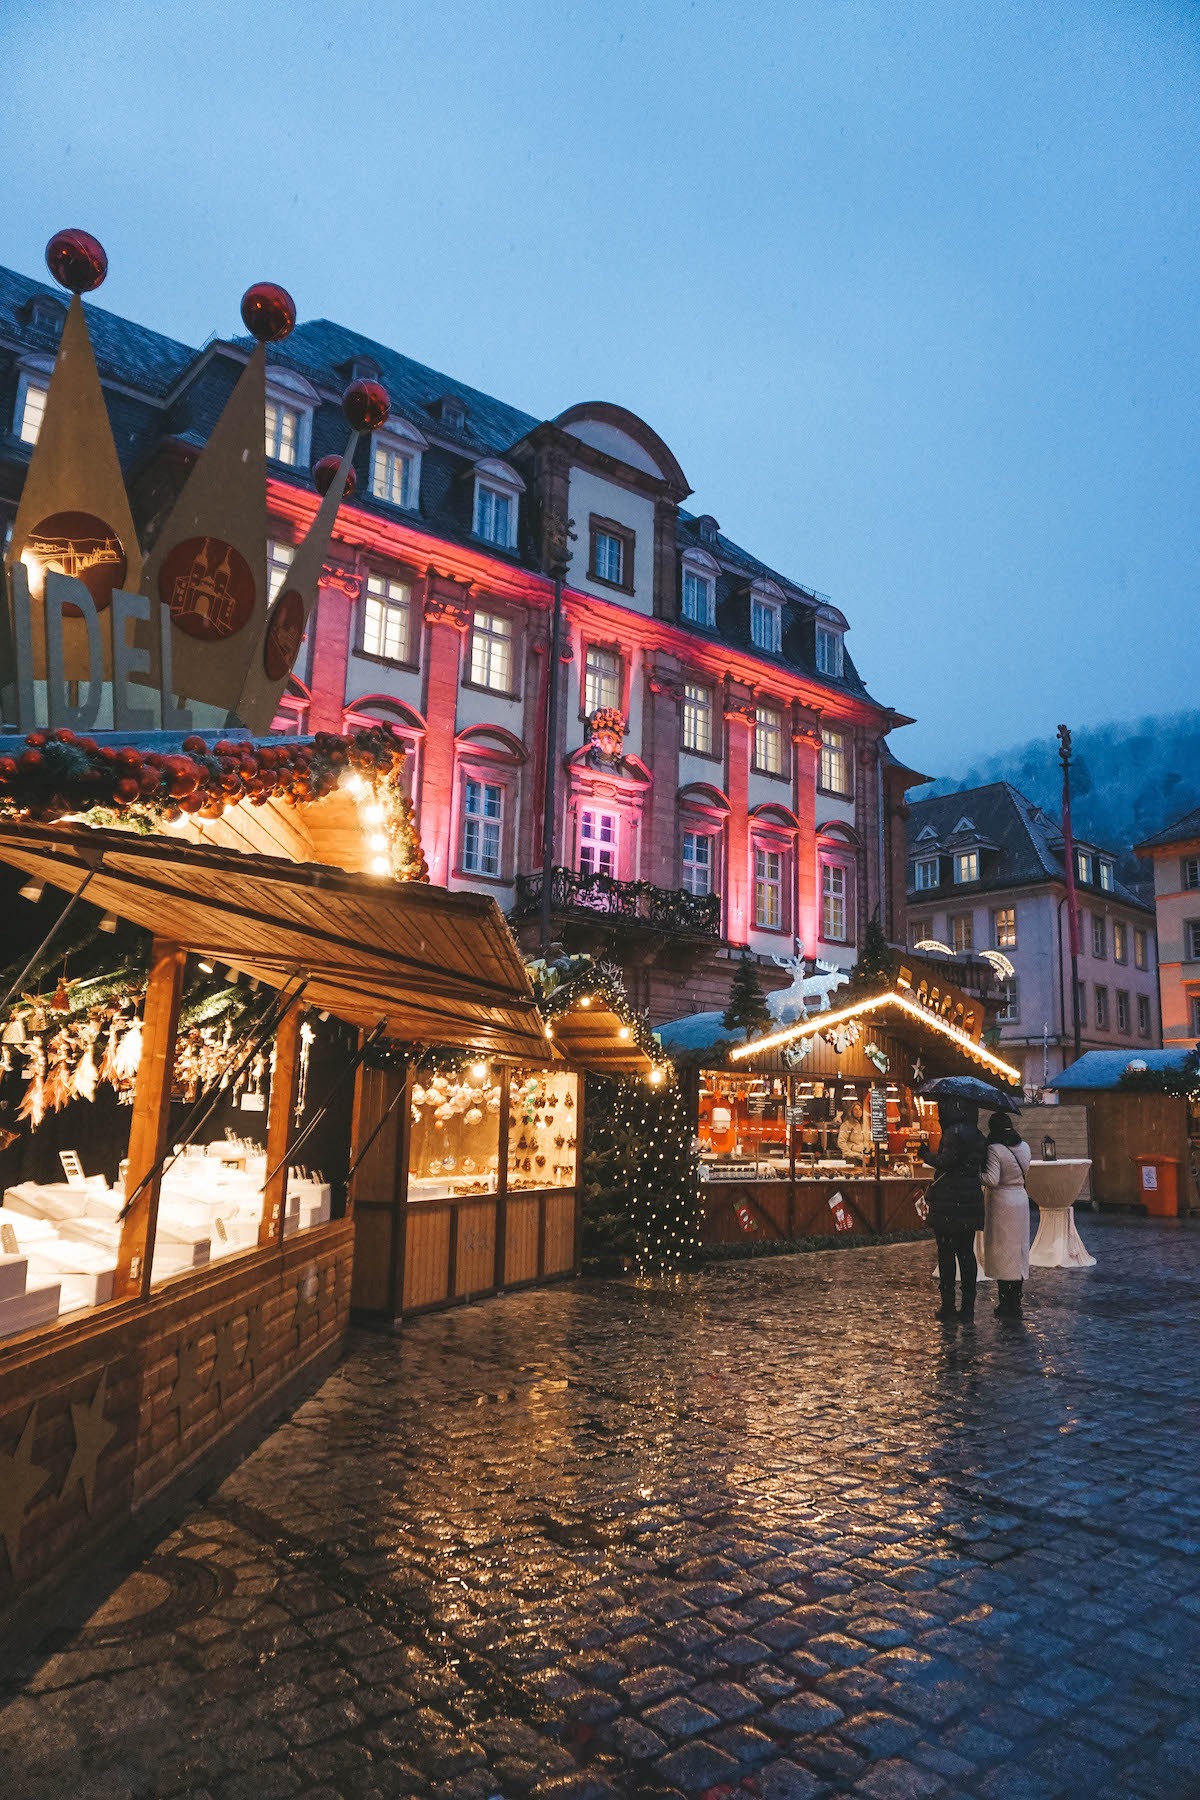 Heidelberg Marktplatz Christmas market at dusk